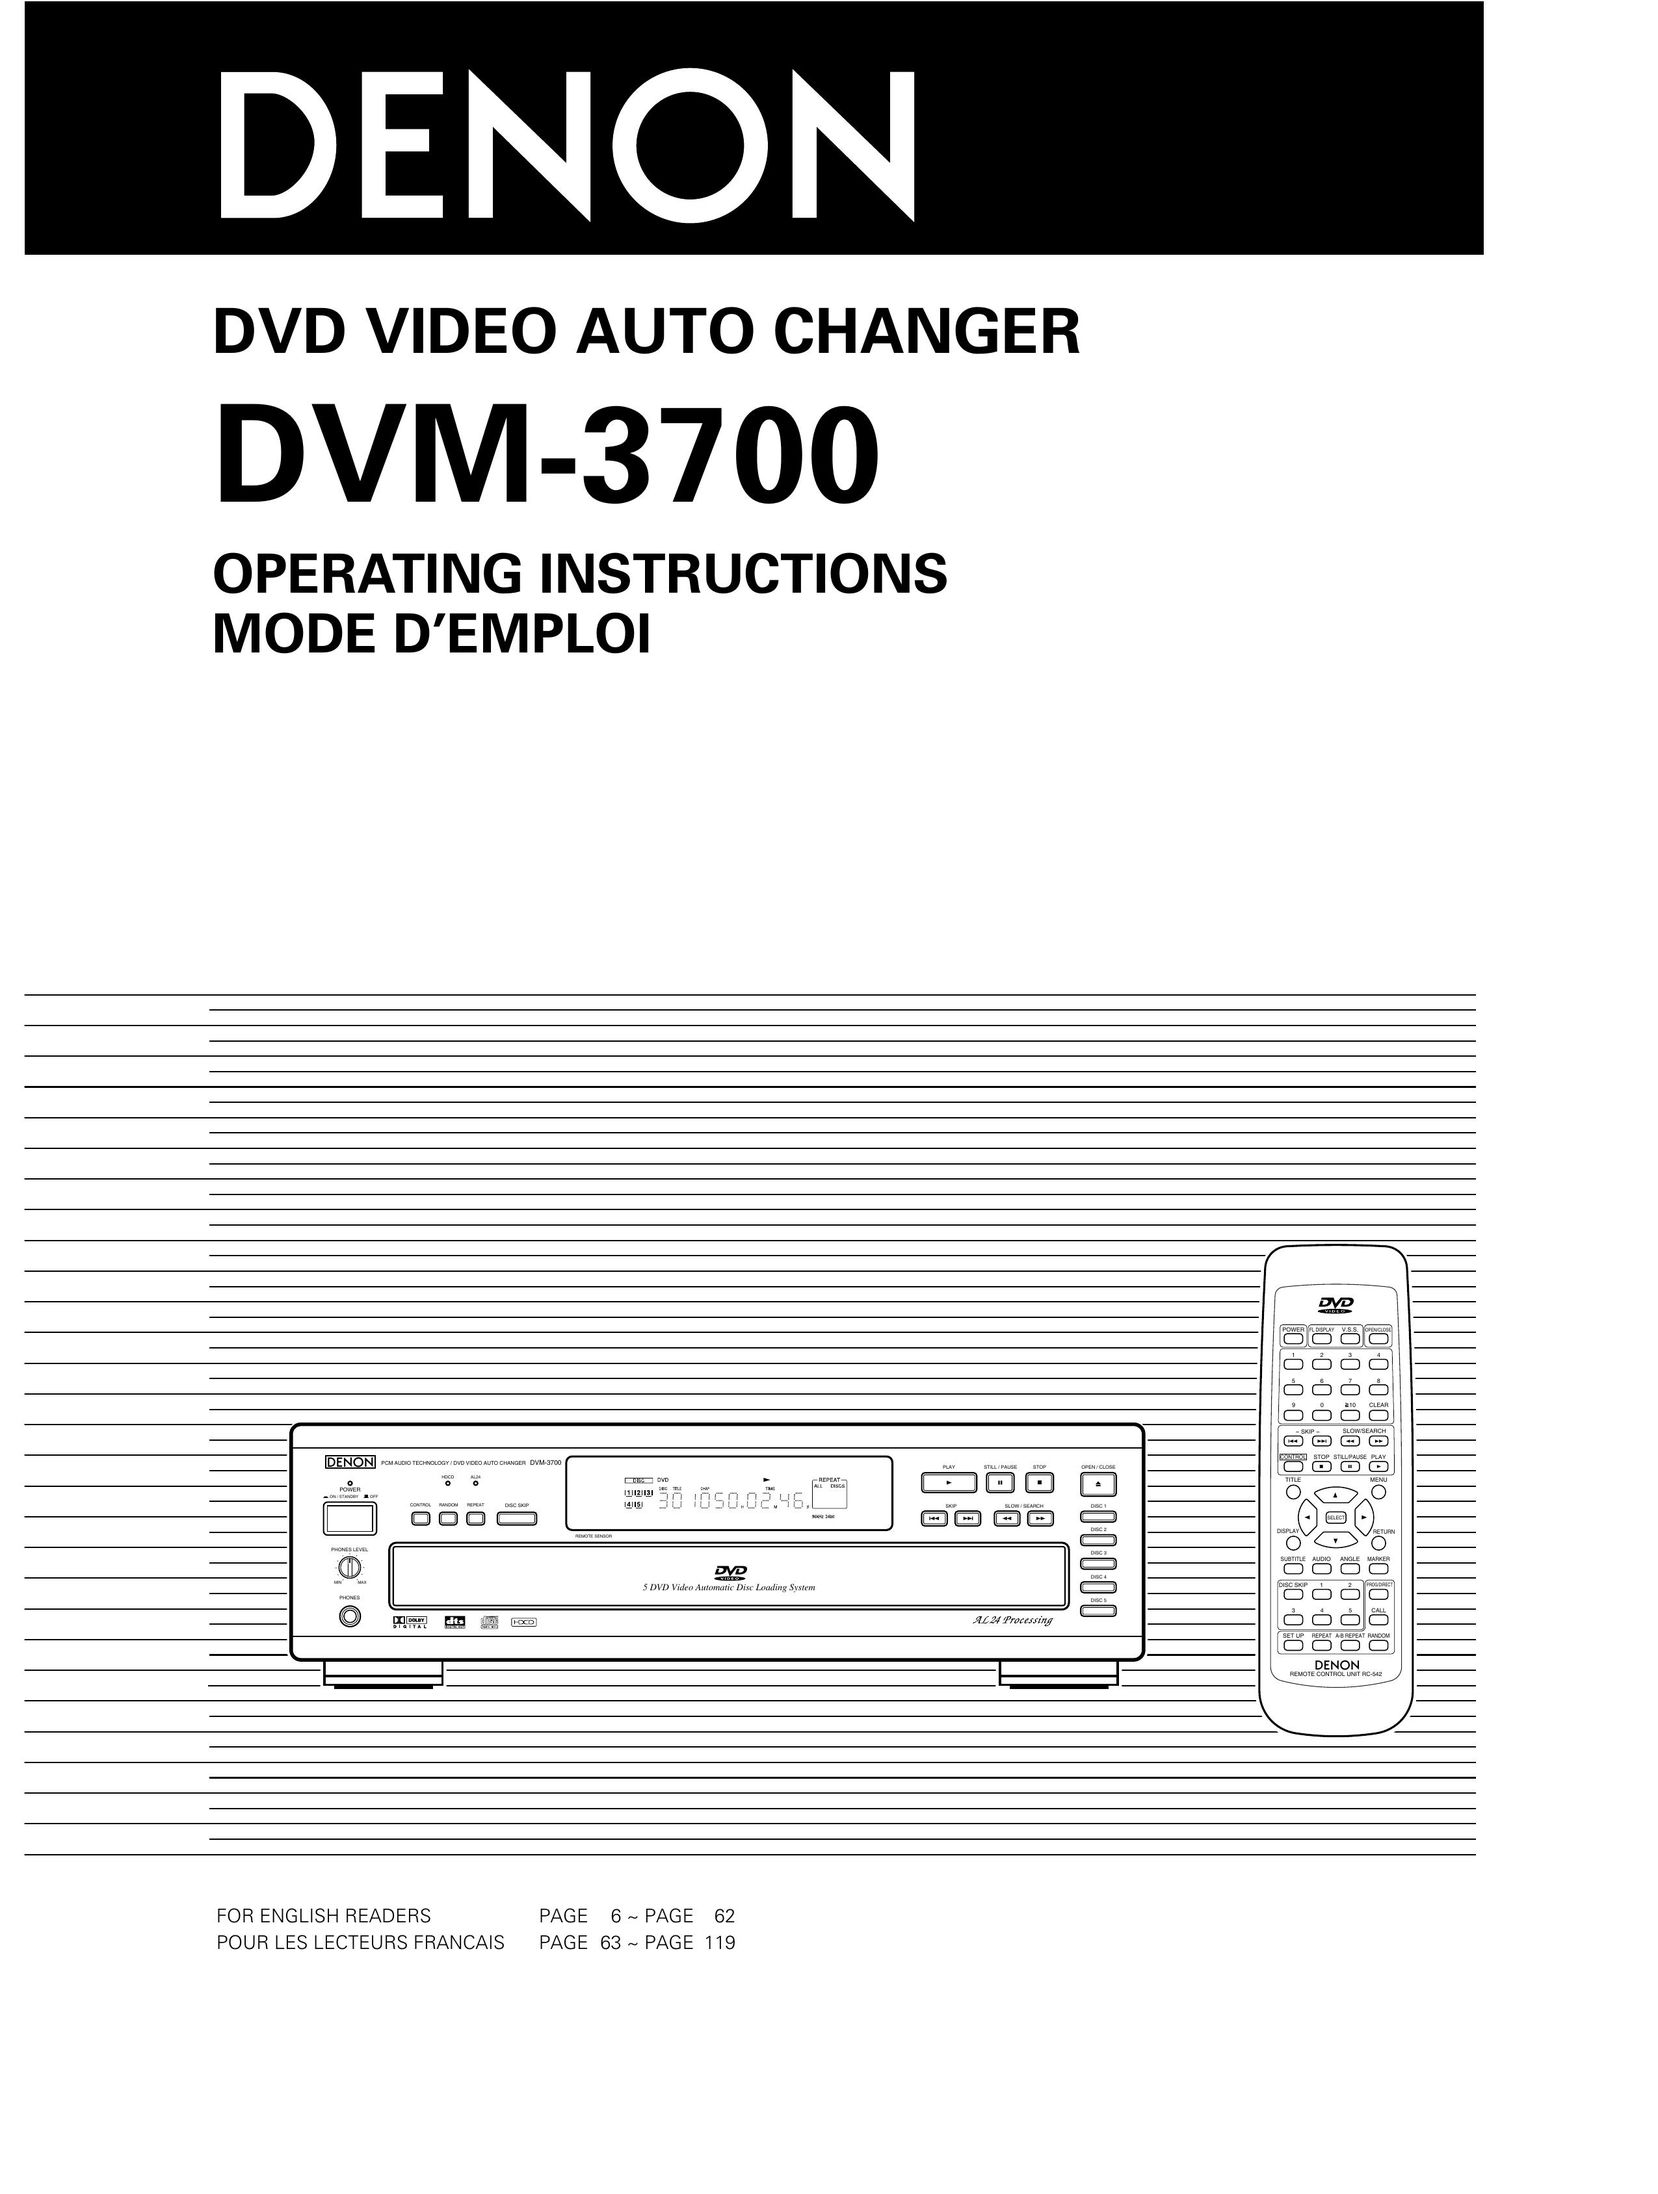 Denon DMV-3700 DVD Player User Manual